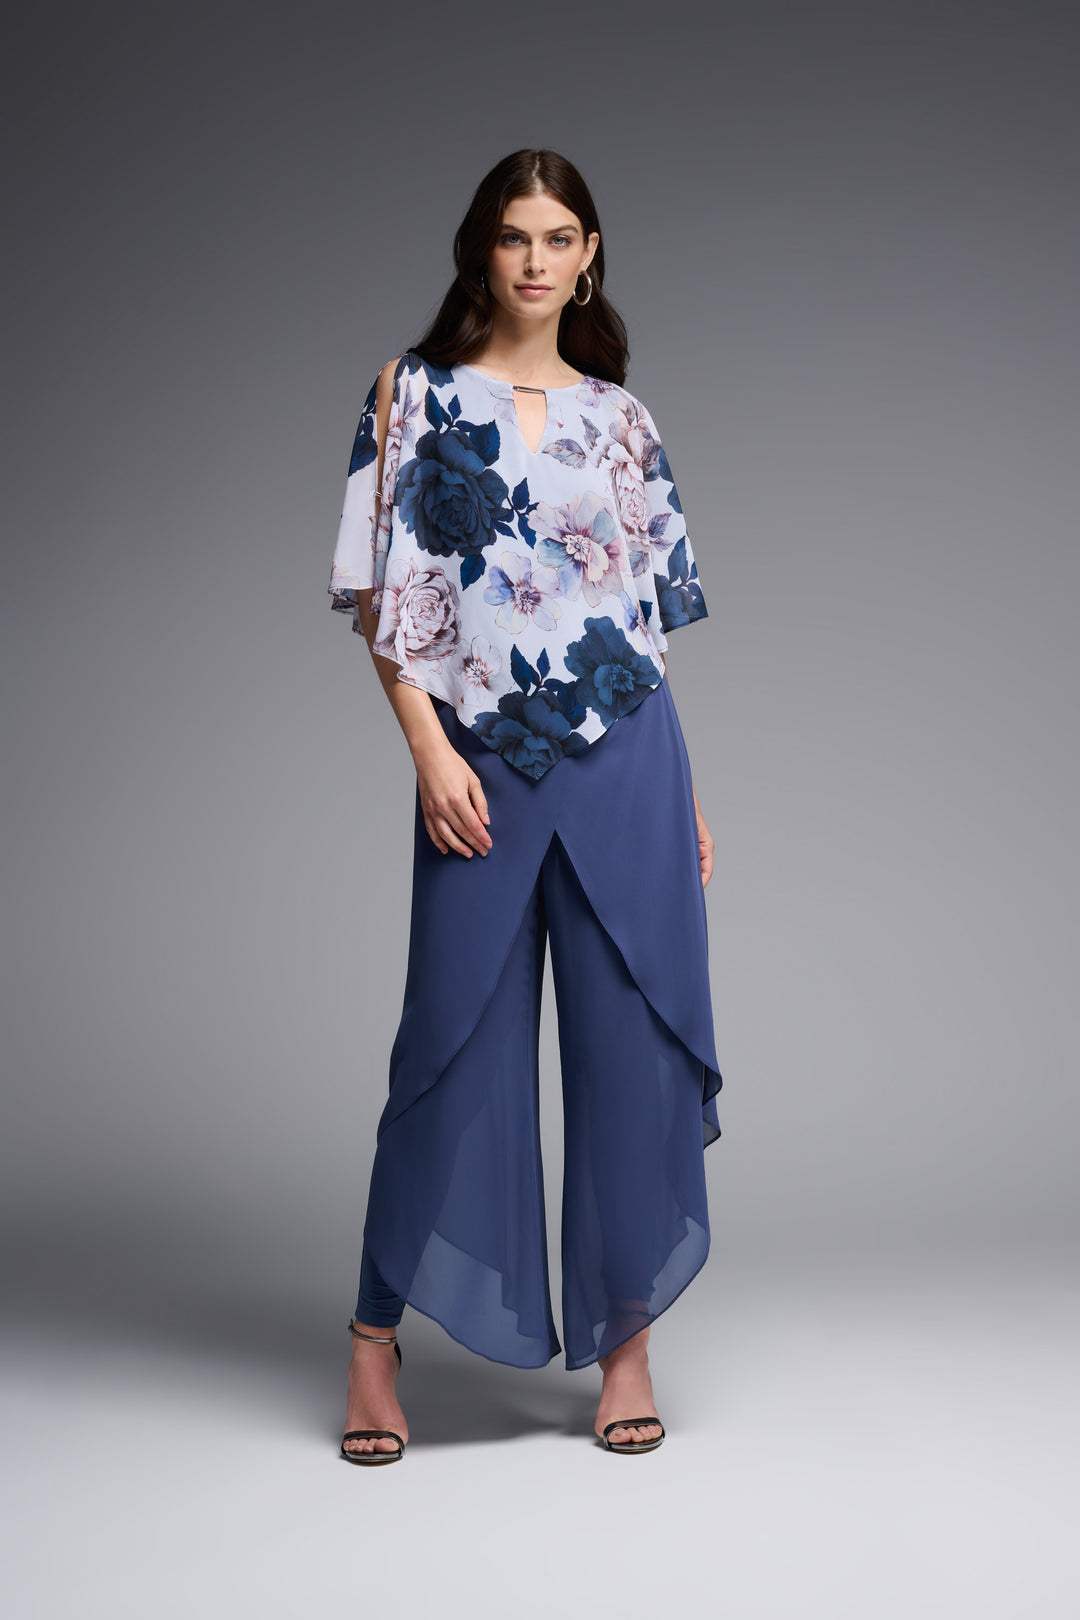 Joseph Ribkoff Spring 2023 women's wedding guest floral poncho chiffon overlay blouse top - model